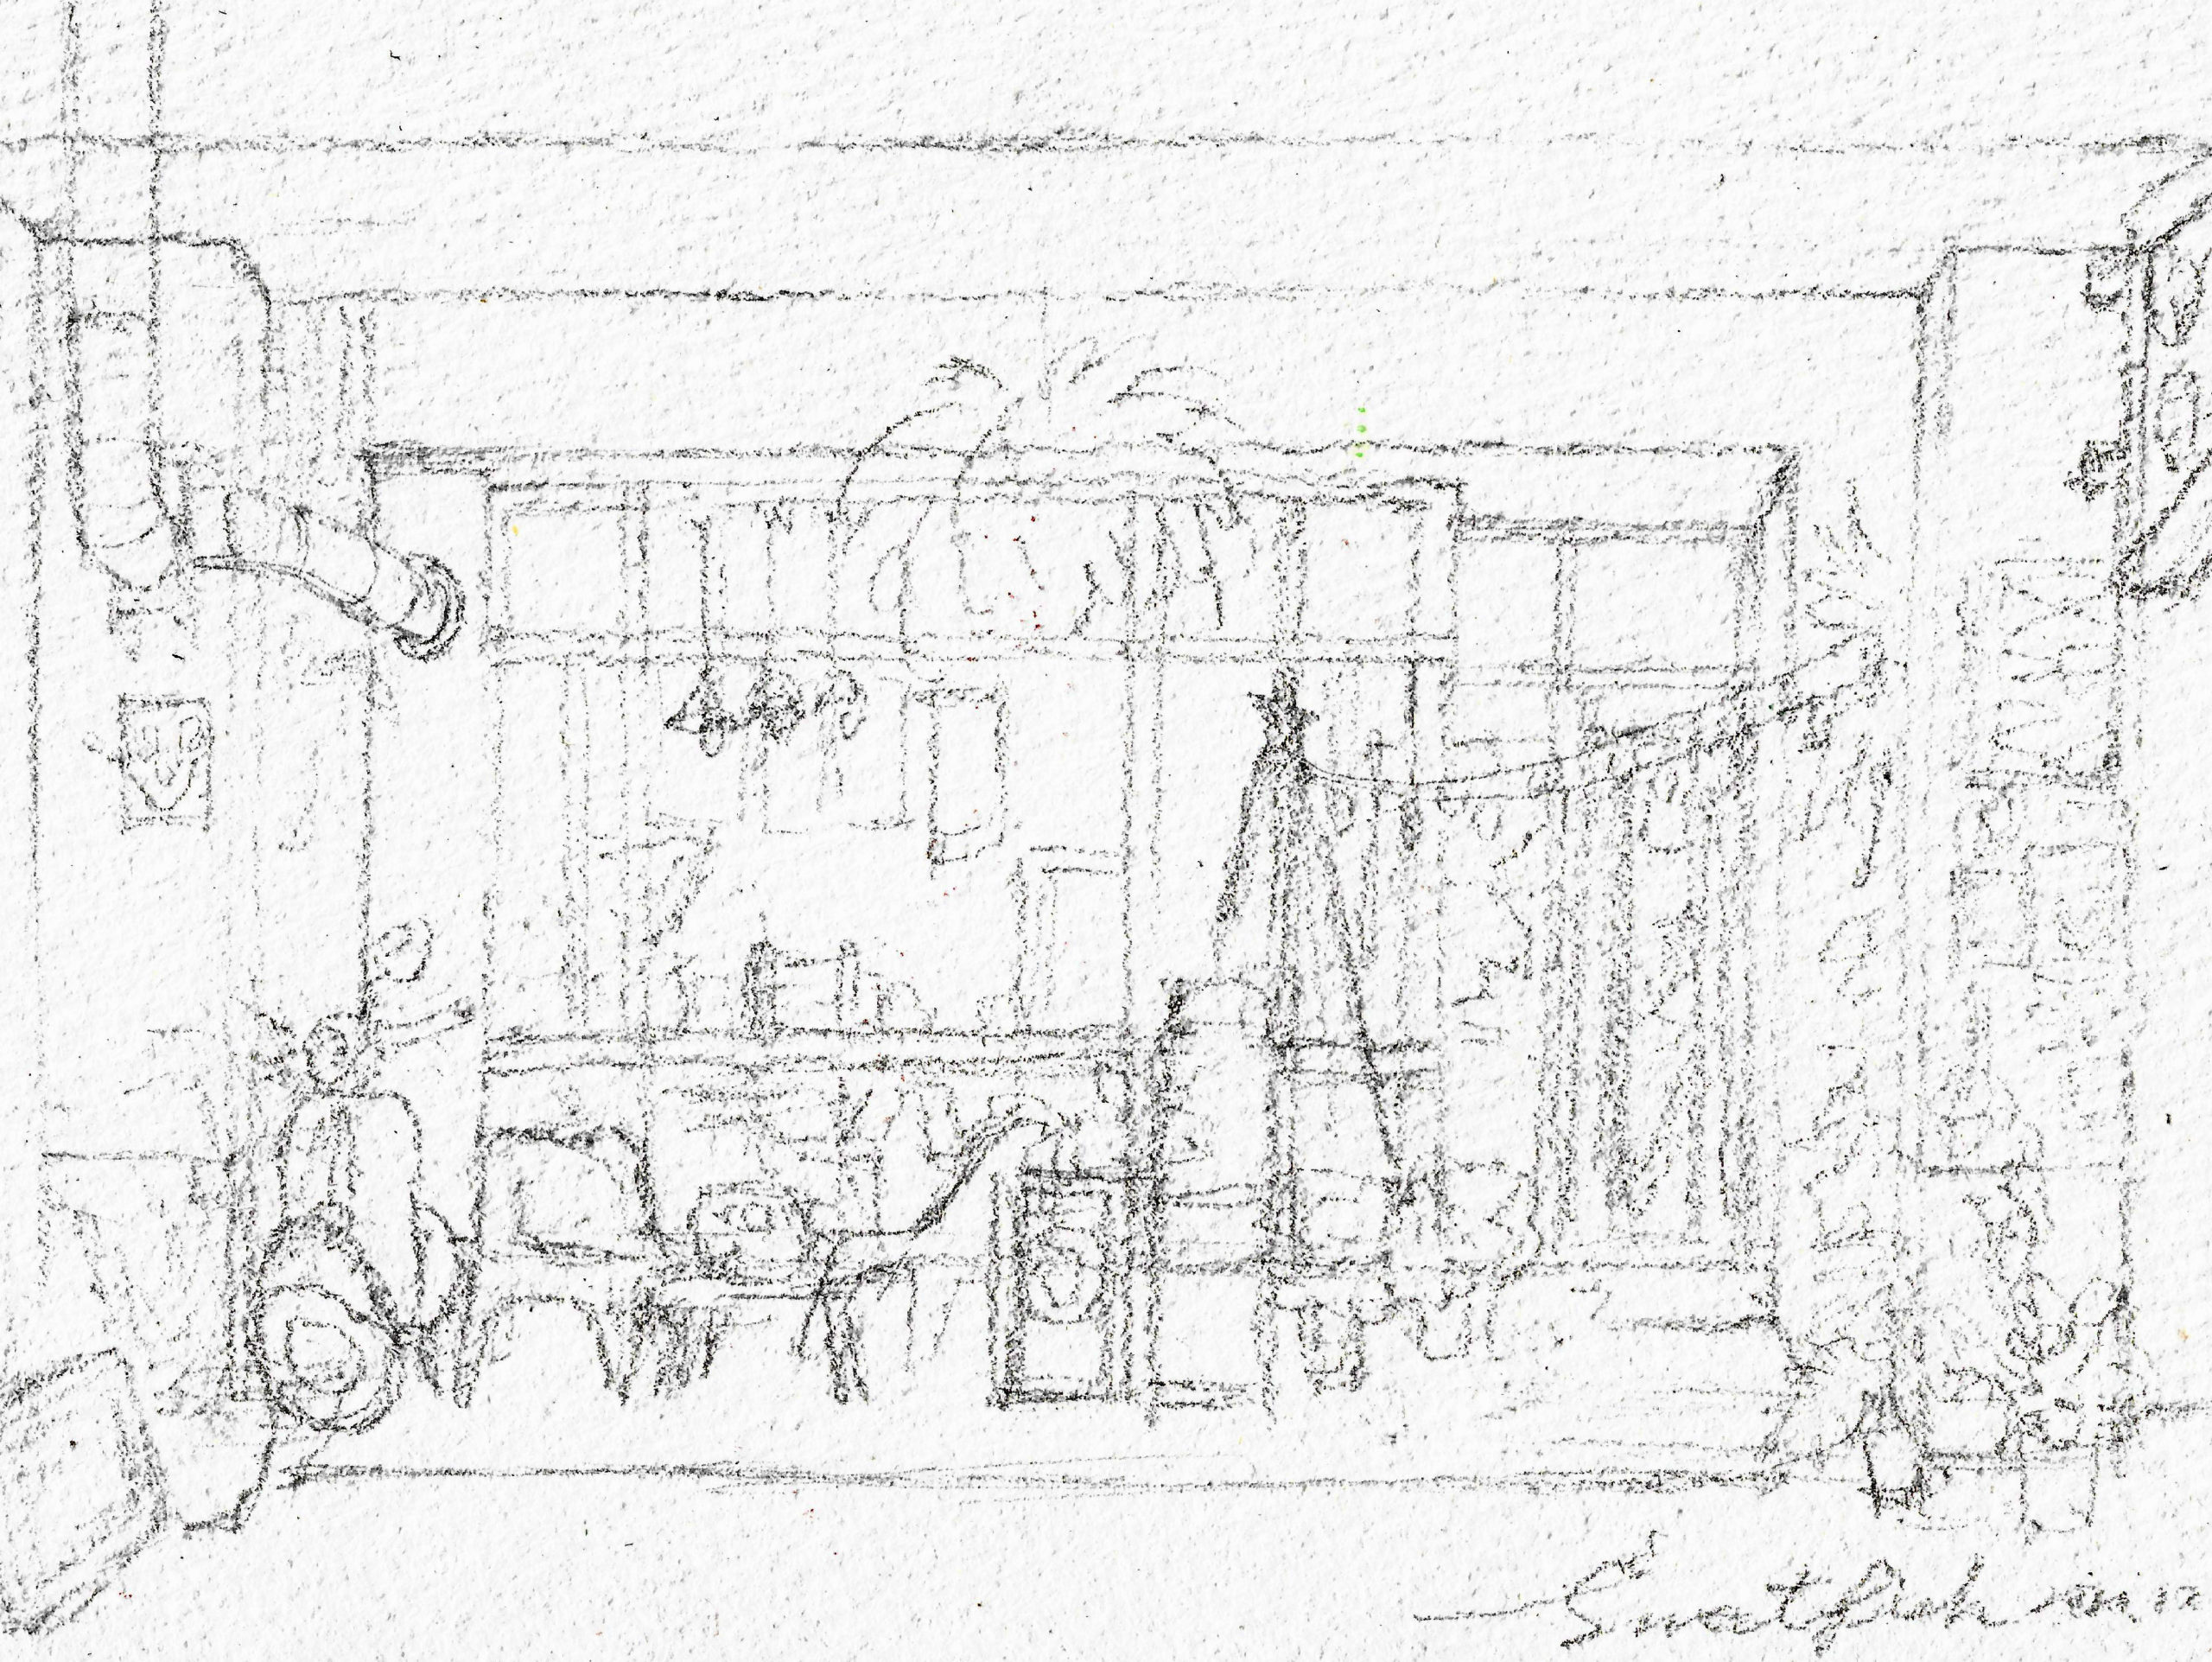 sundawn-coffee-roaster-shopfront-illustration-by-sweetfish-food-art-draft